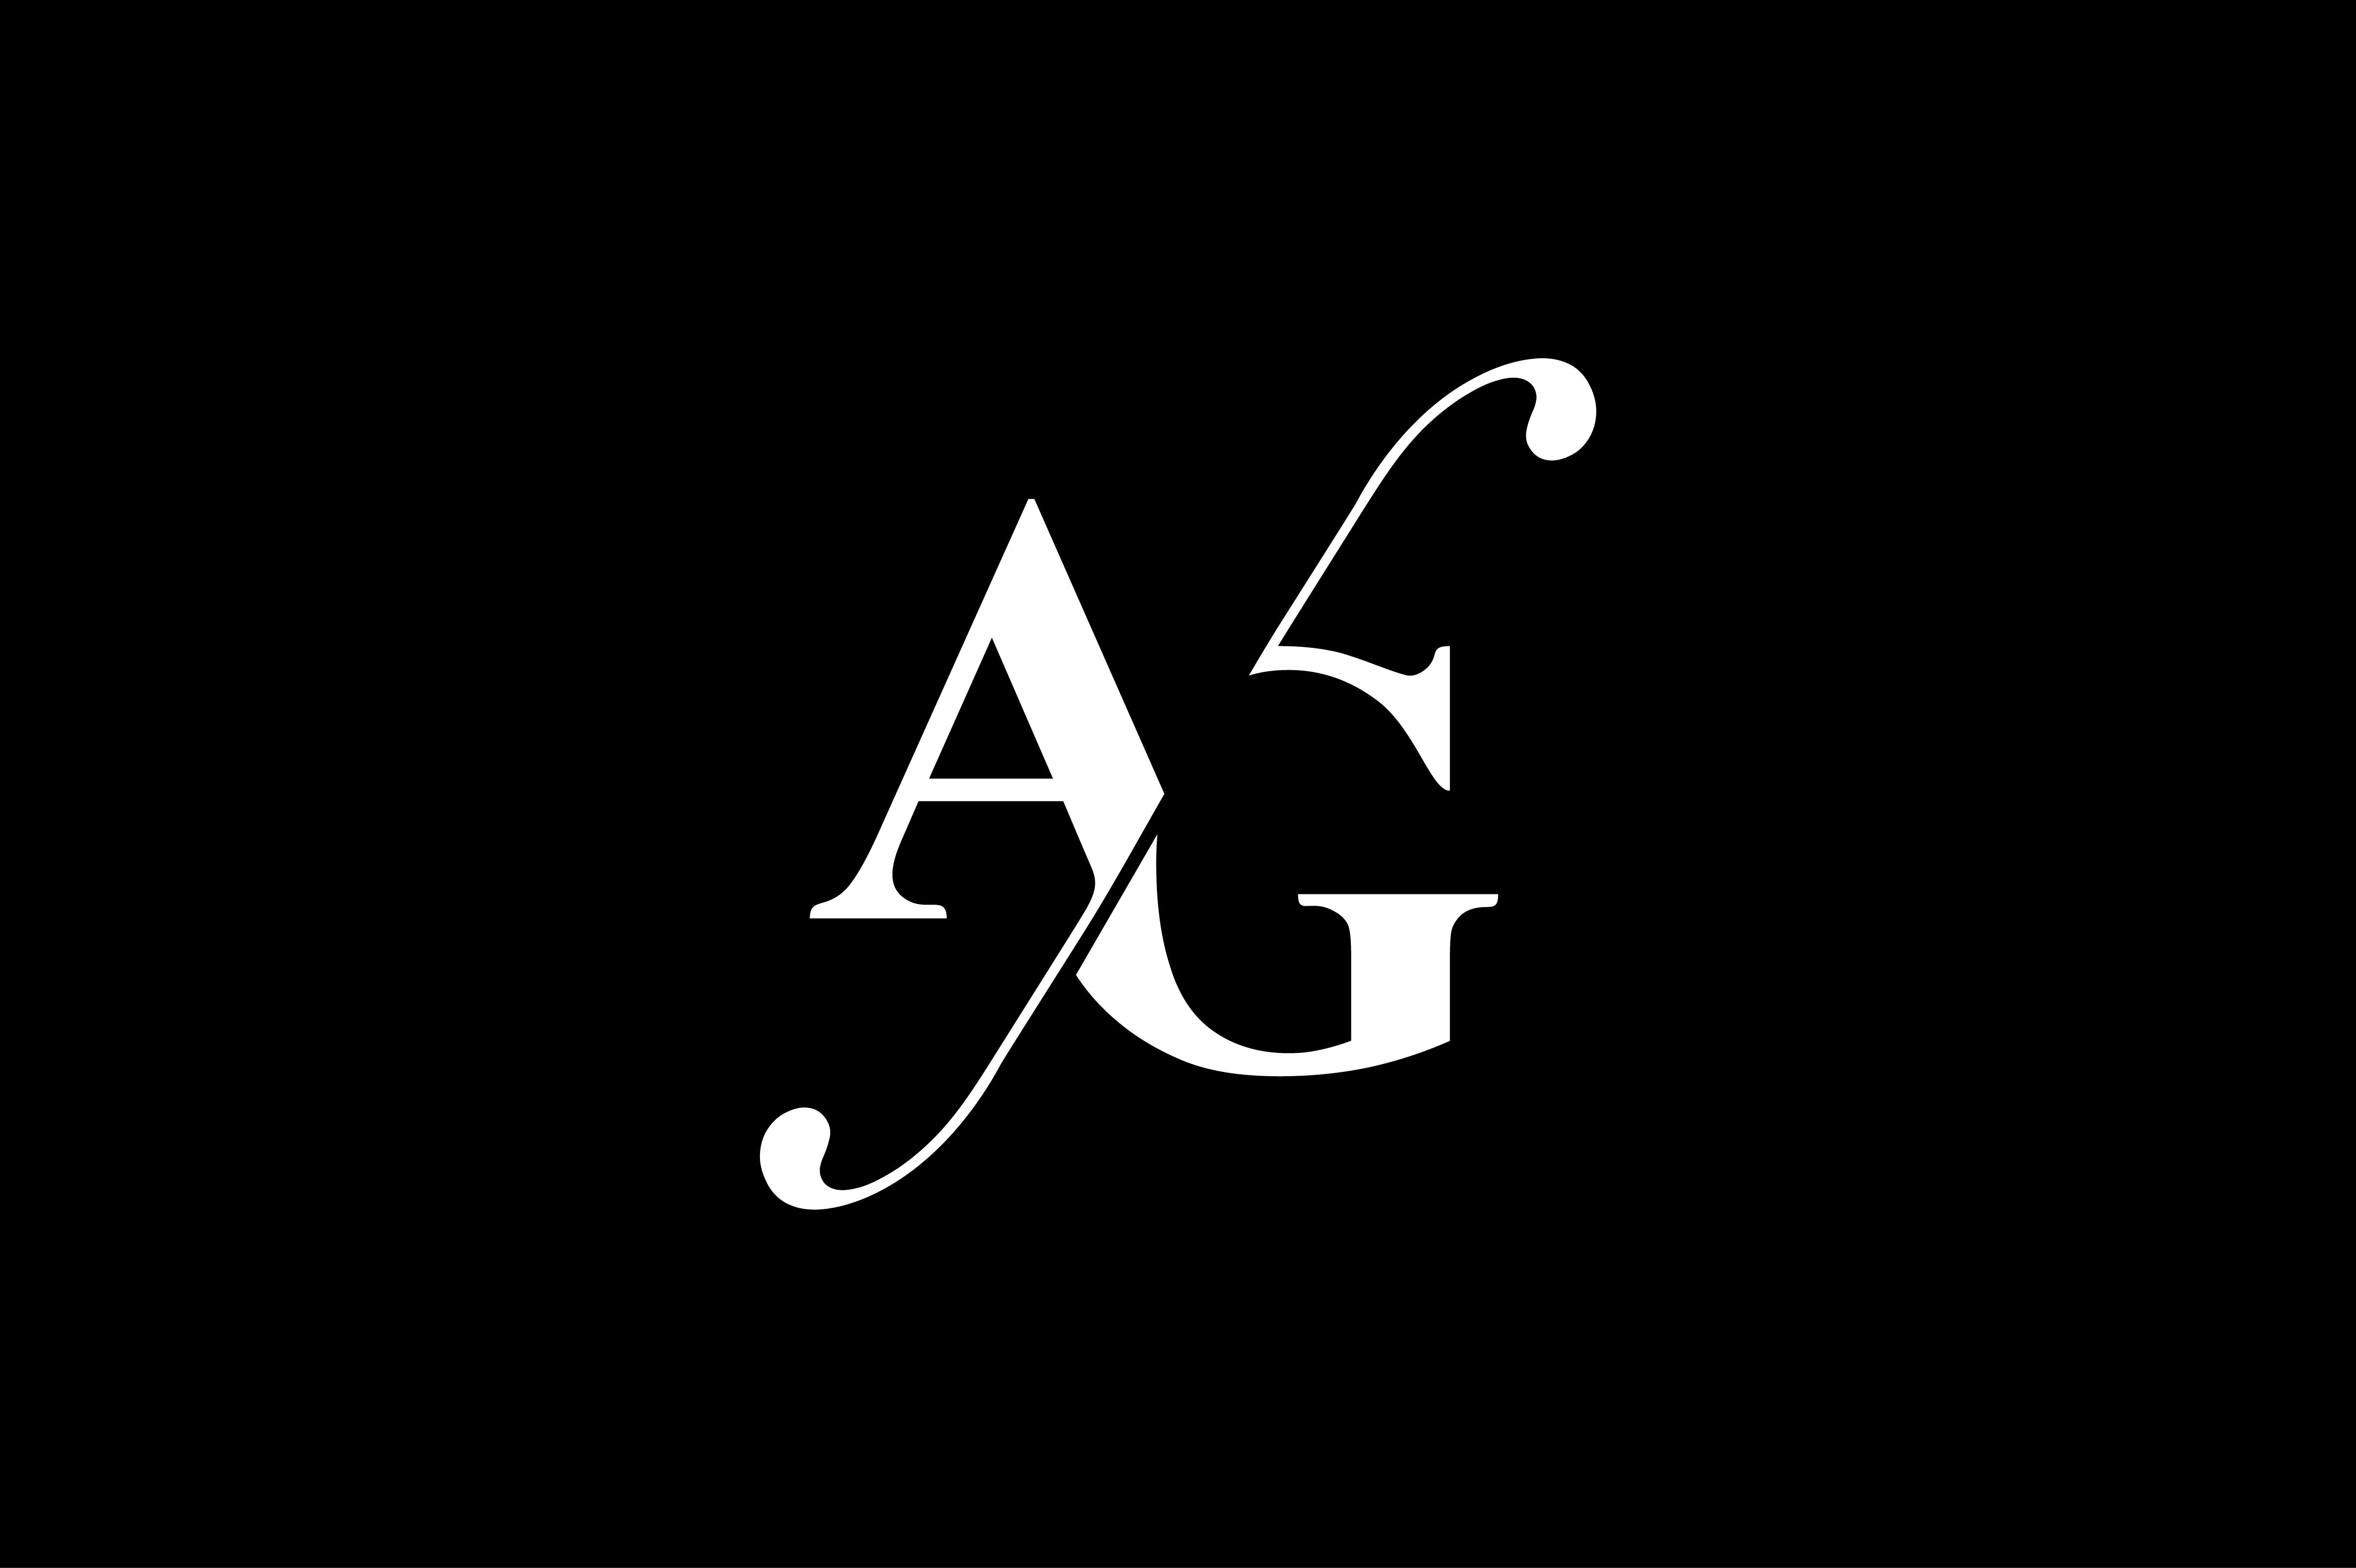 ag-monogram-logo-design-by-vectorseller-thehungryjpeg